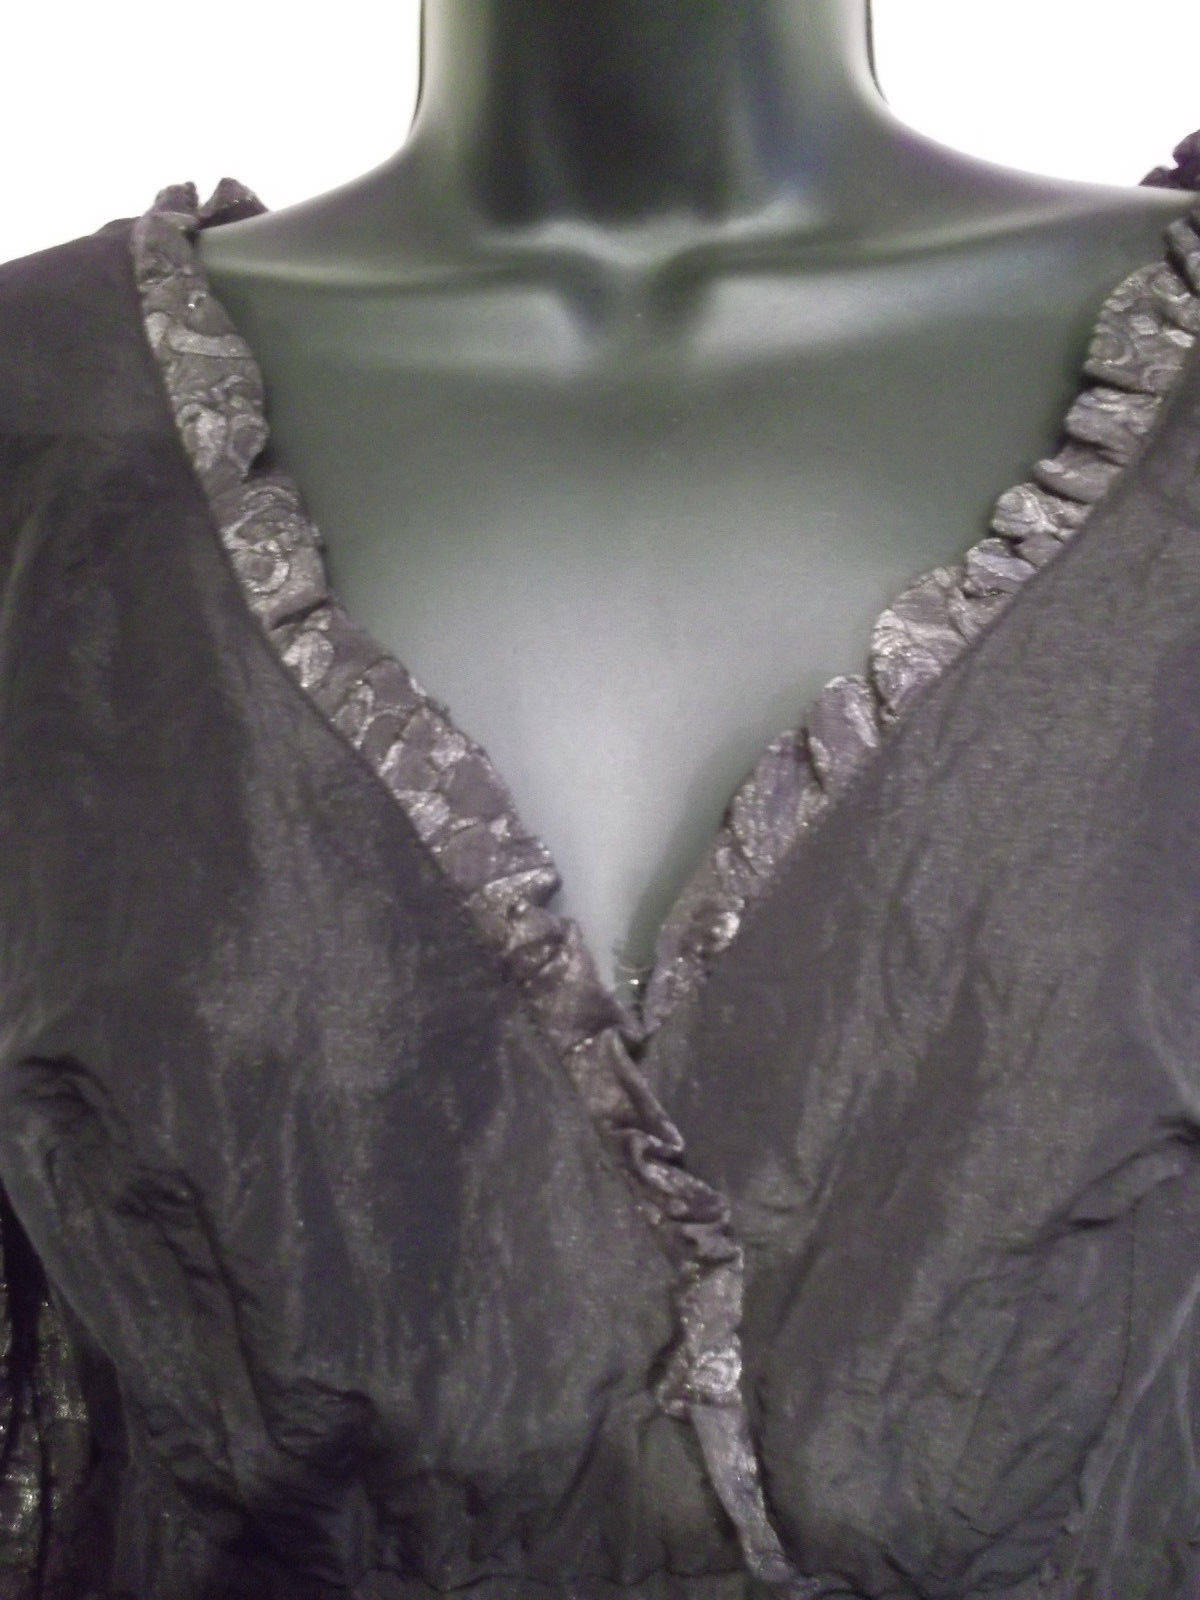 Gorgeous floaty Black Wrap Front Dress by My Collection Design Paris, Size Medium Wonkey Donkey Bazaar